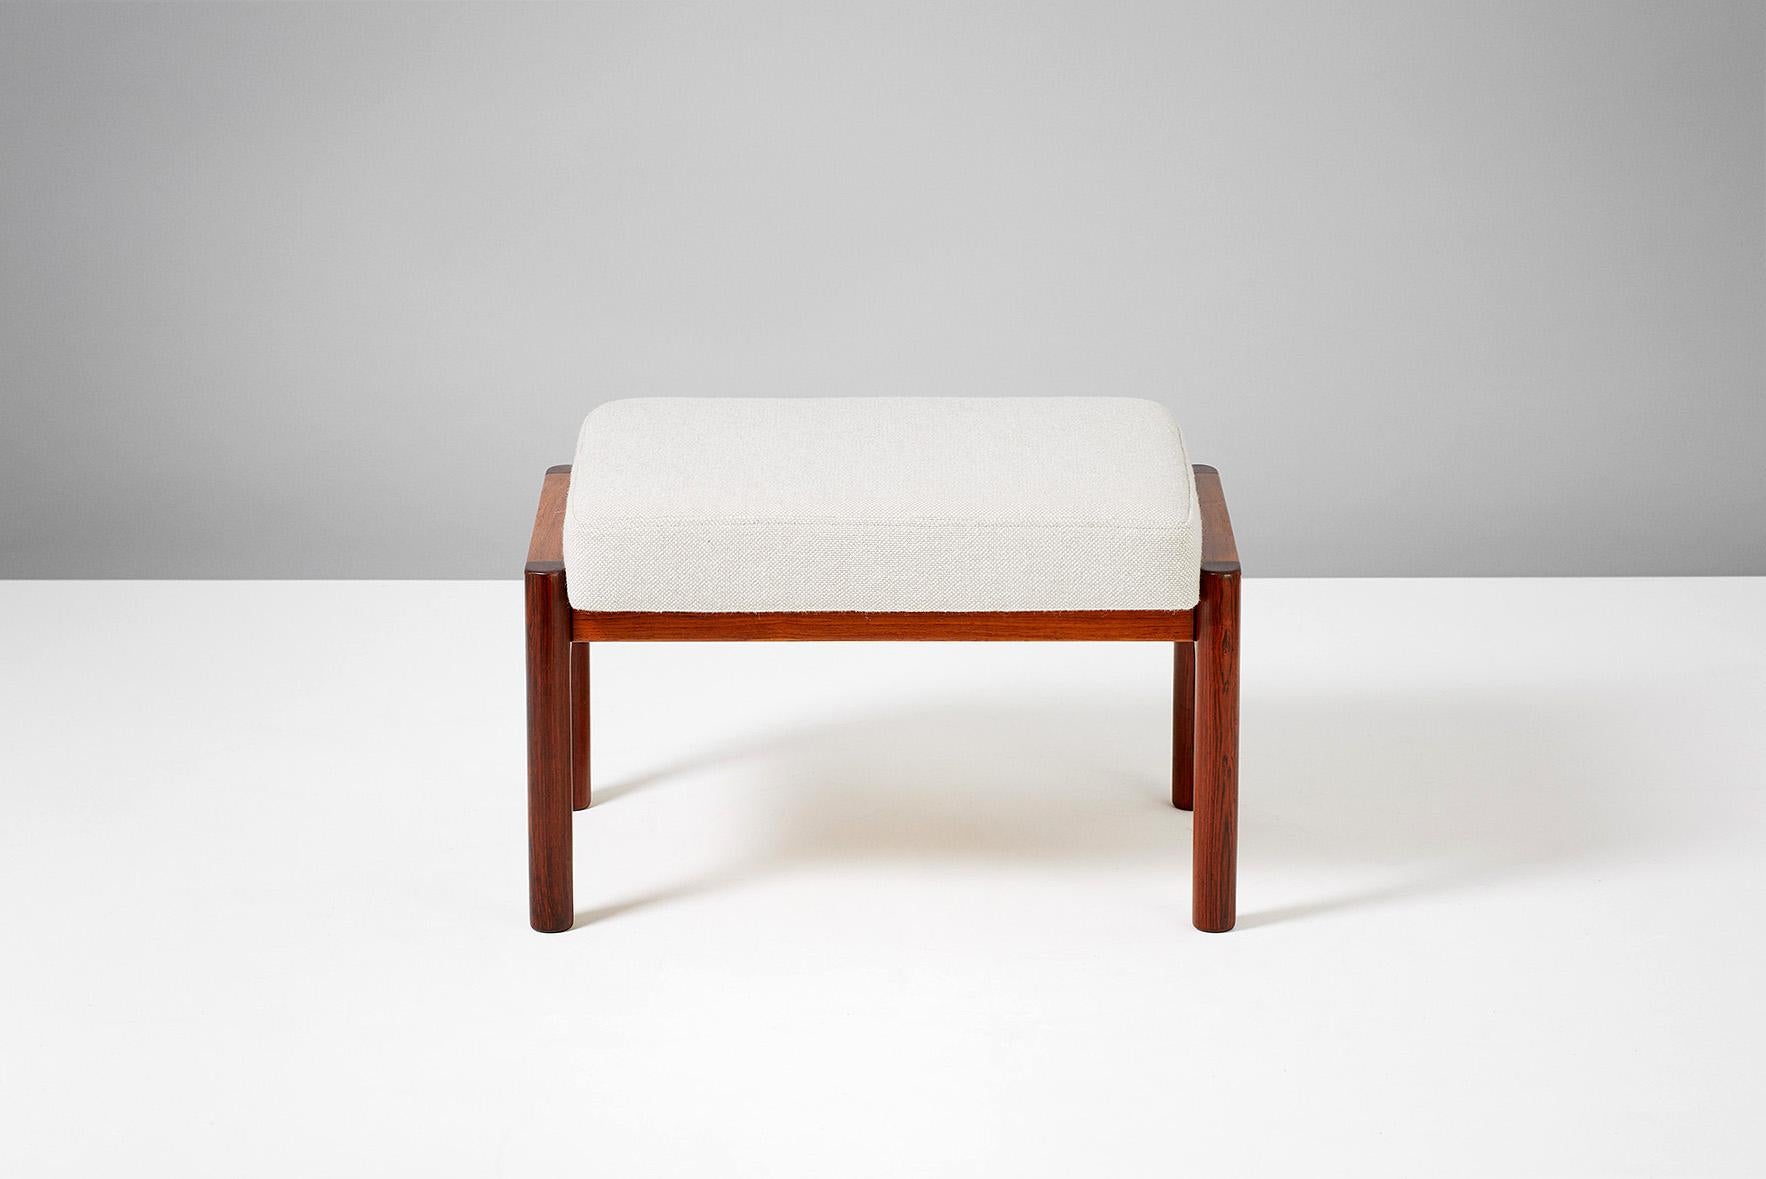 Kurt Ostervig

Rosewood Ottoman, 1950s

Produced by Slagelse Møbelfabrik, Denmark. Seat reupholstered in Kvadrat wool fabric. 

H: 39cm / W: 63cm / D: 47cm

 

